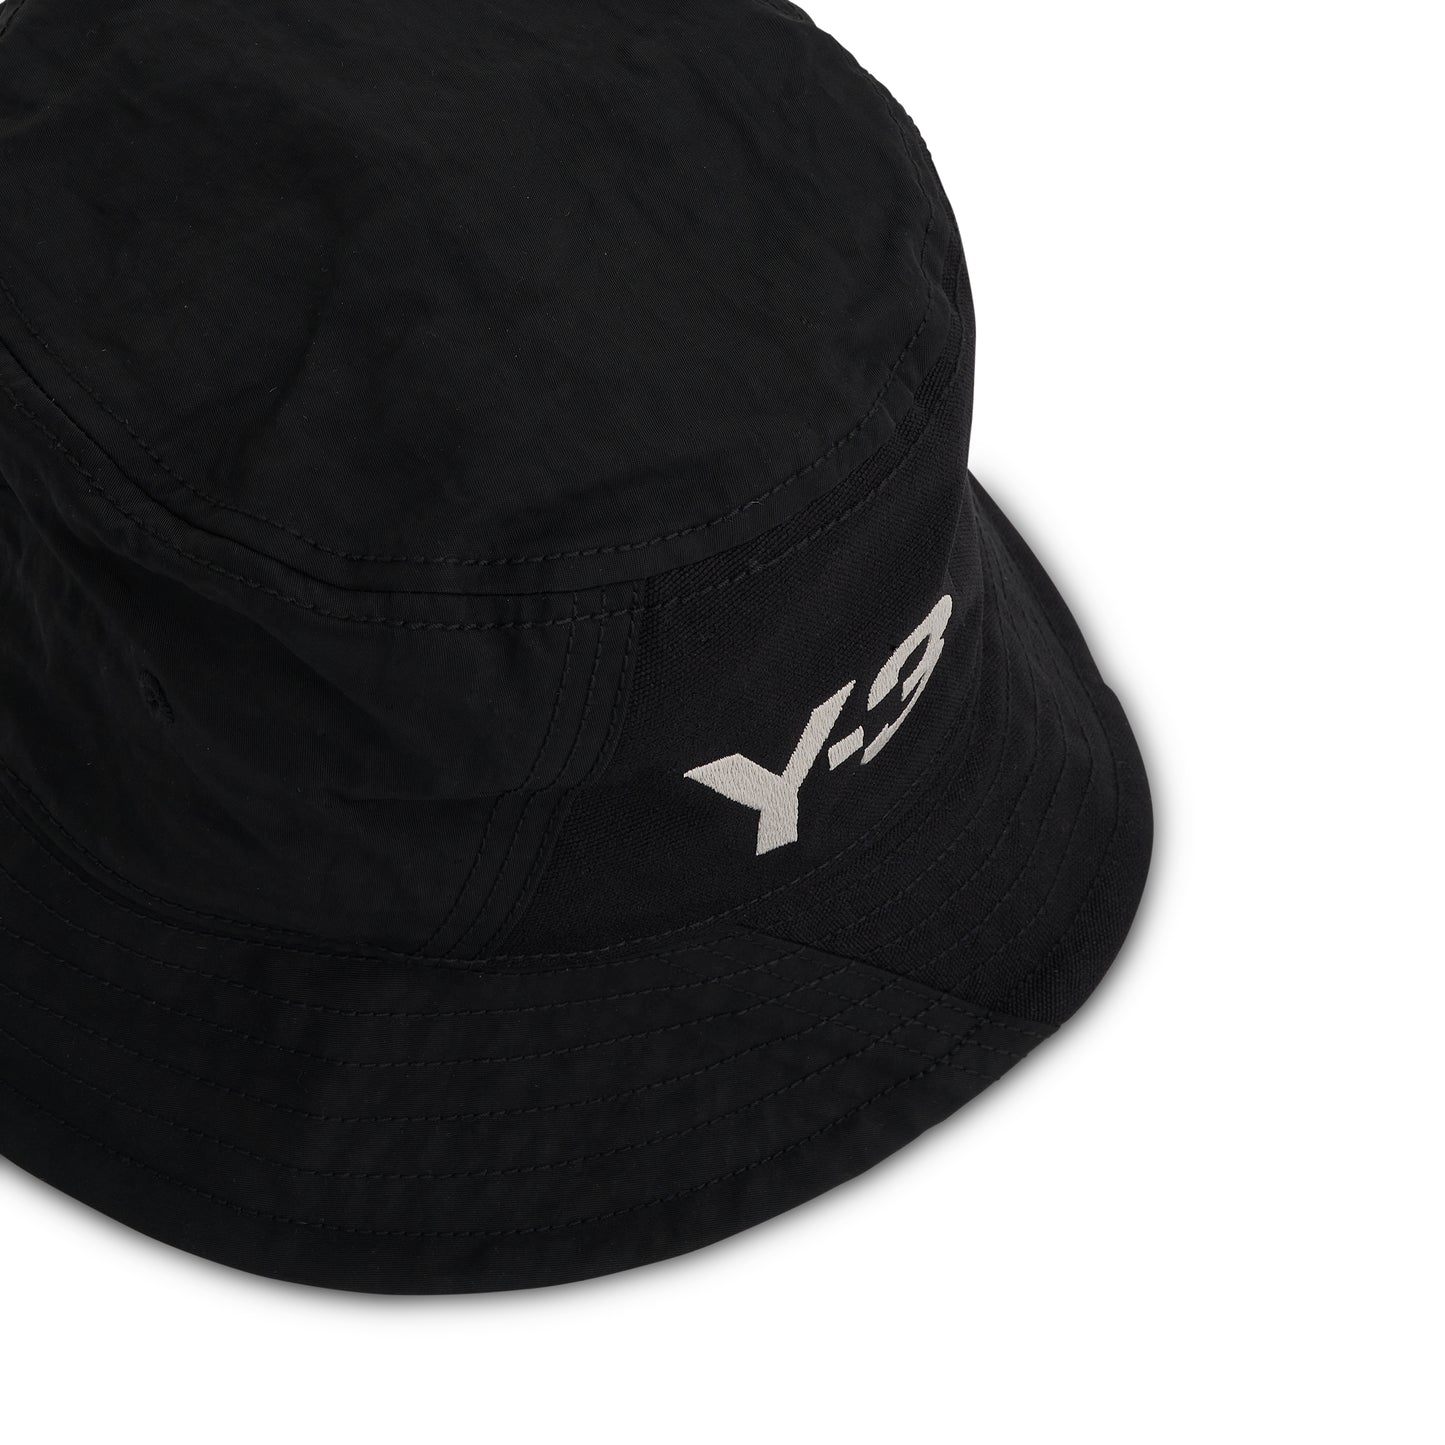 Y-3 Classic Bucket Hat in Black